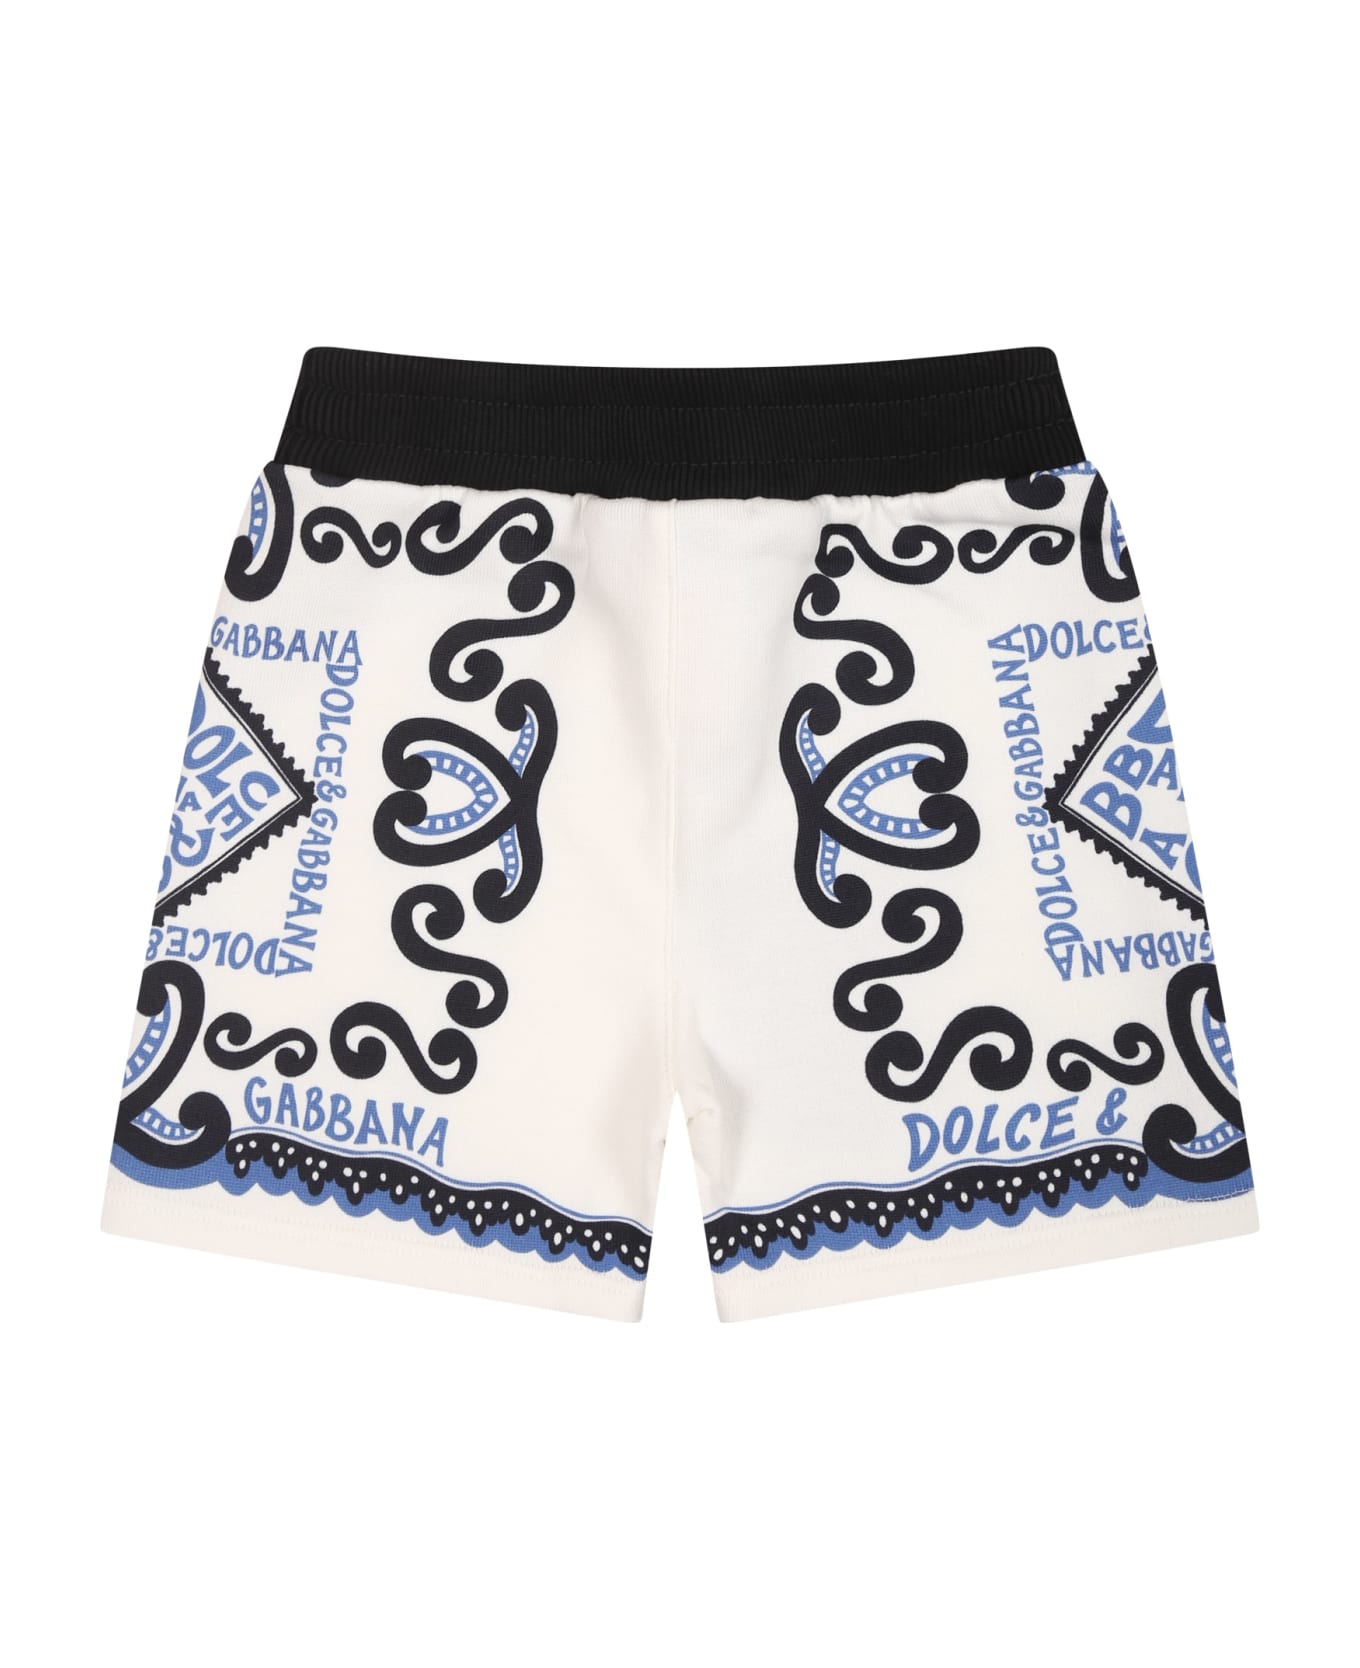 Dolce & Gabbana White Shorts For Baby Boy With Bandana Print And Logo - White